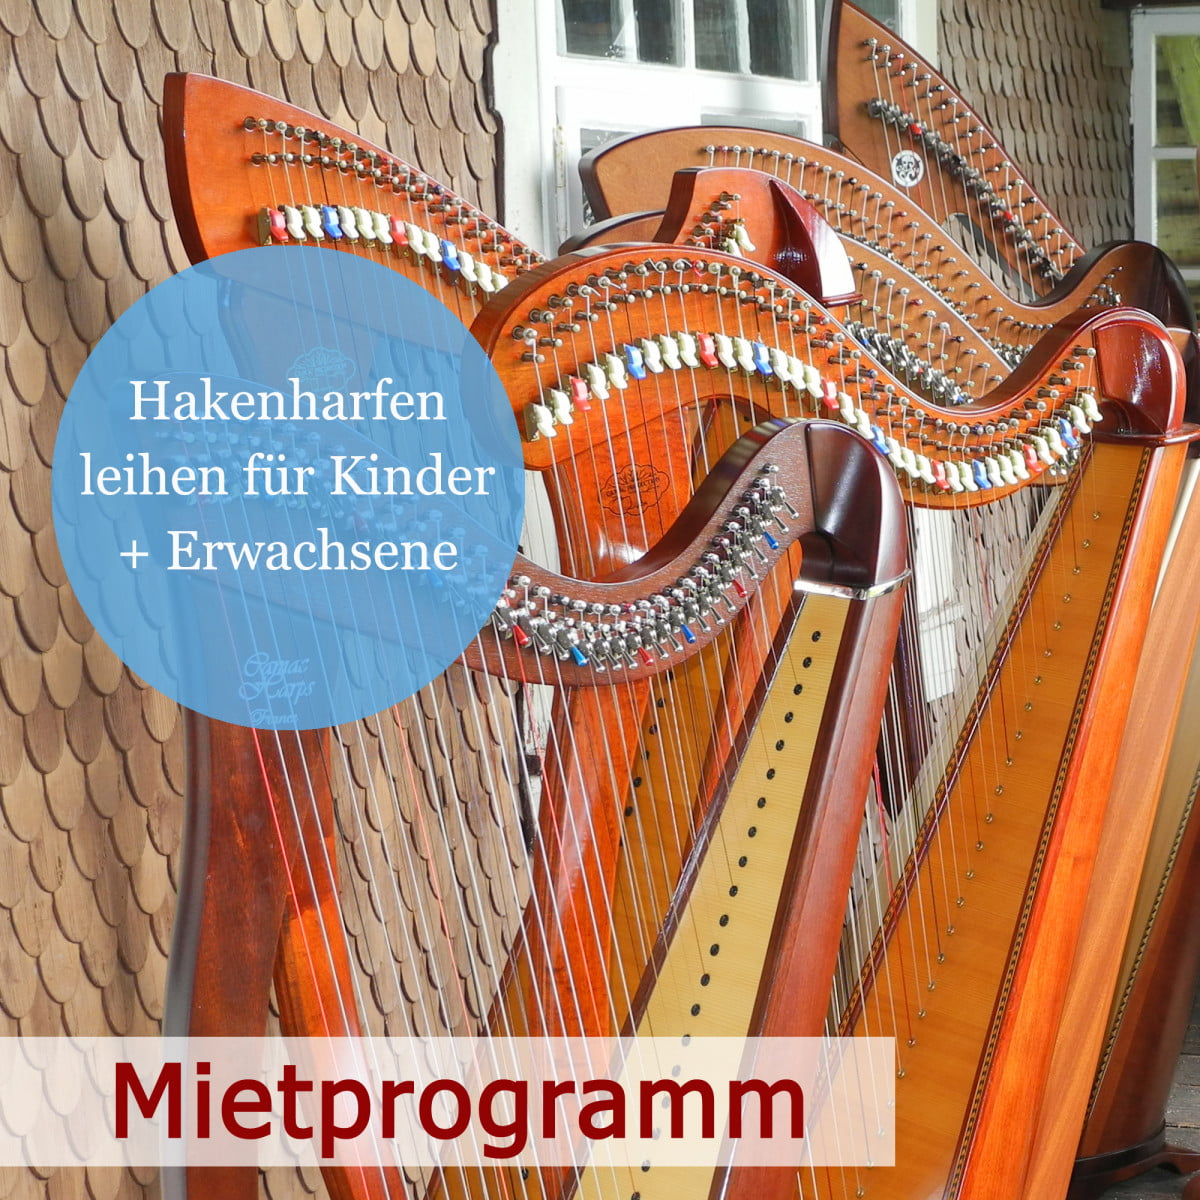 Mietprogramm, Leihharfen Klangwelt Harfe